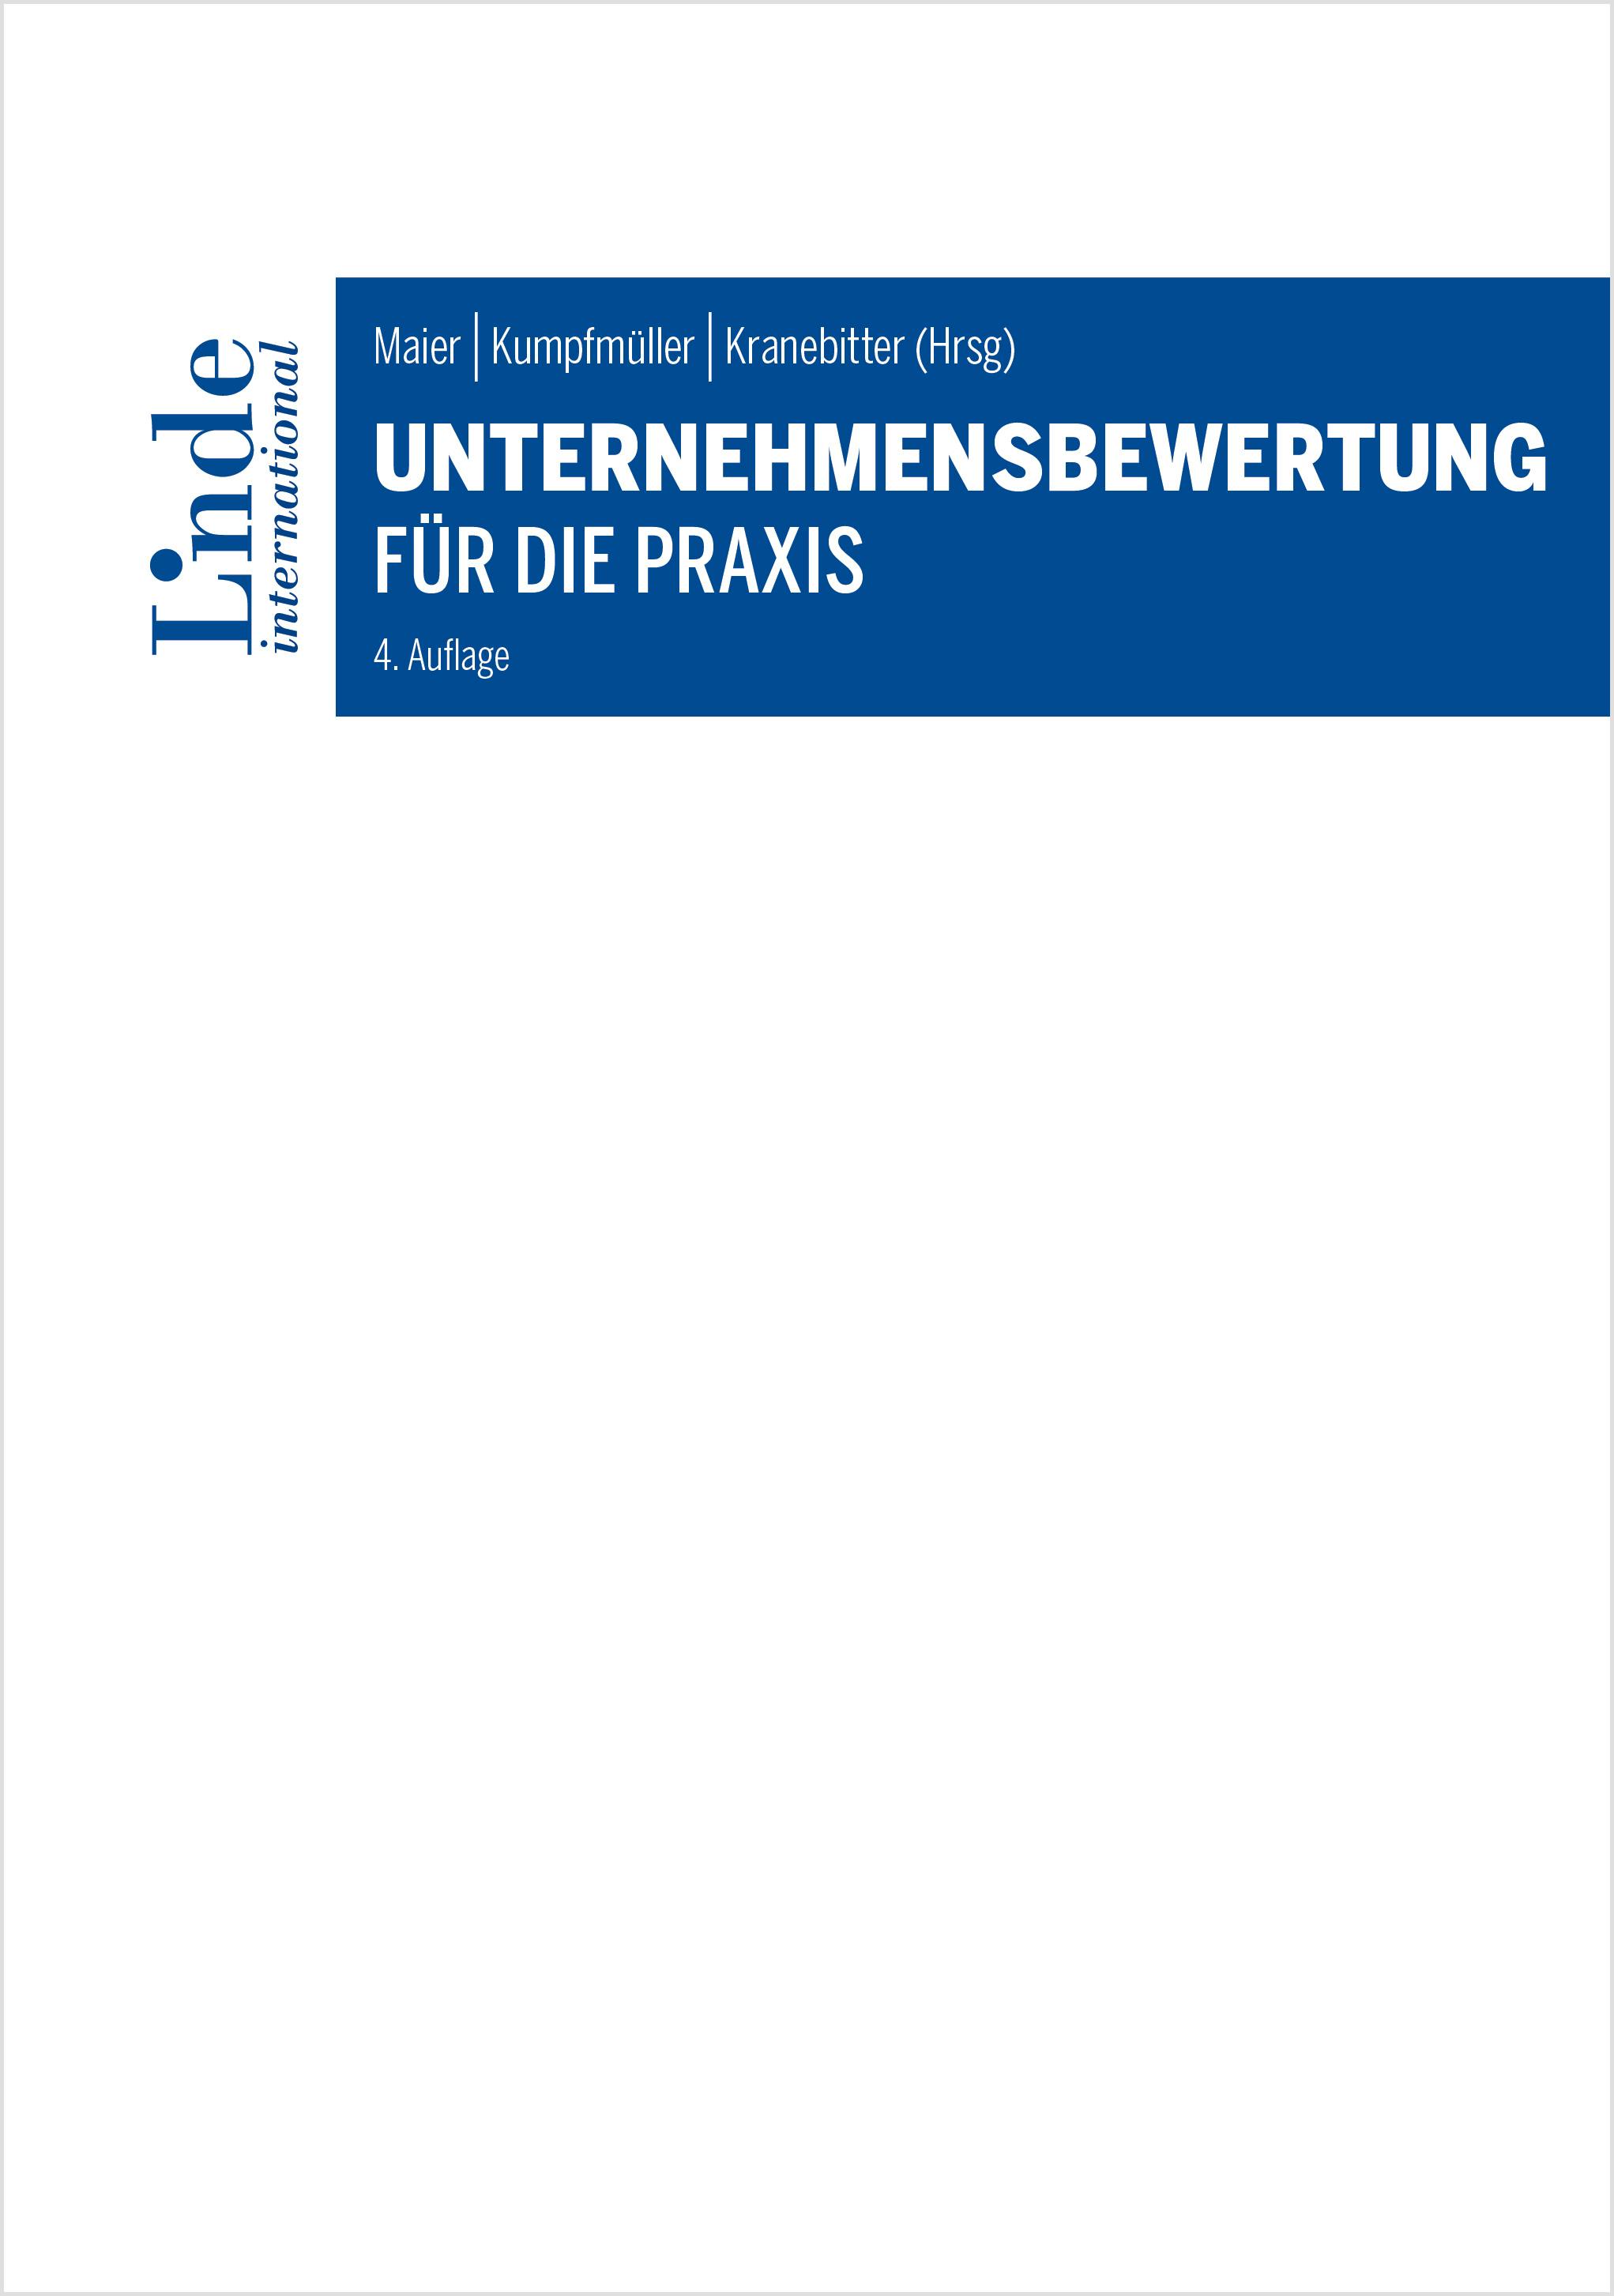 Maier | Kumpfmüller | Kranebitter (Hrsg.)
Unternehmensbewertung für die Praxis